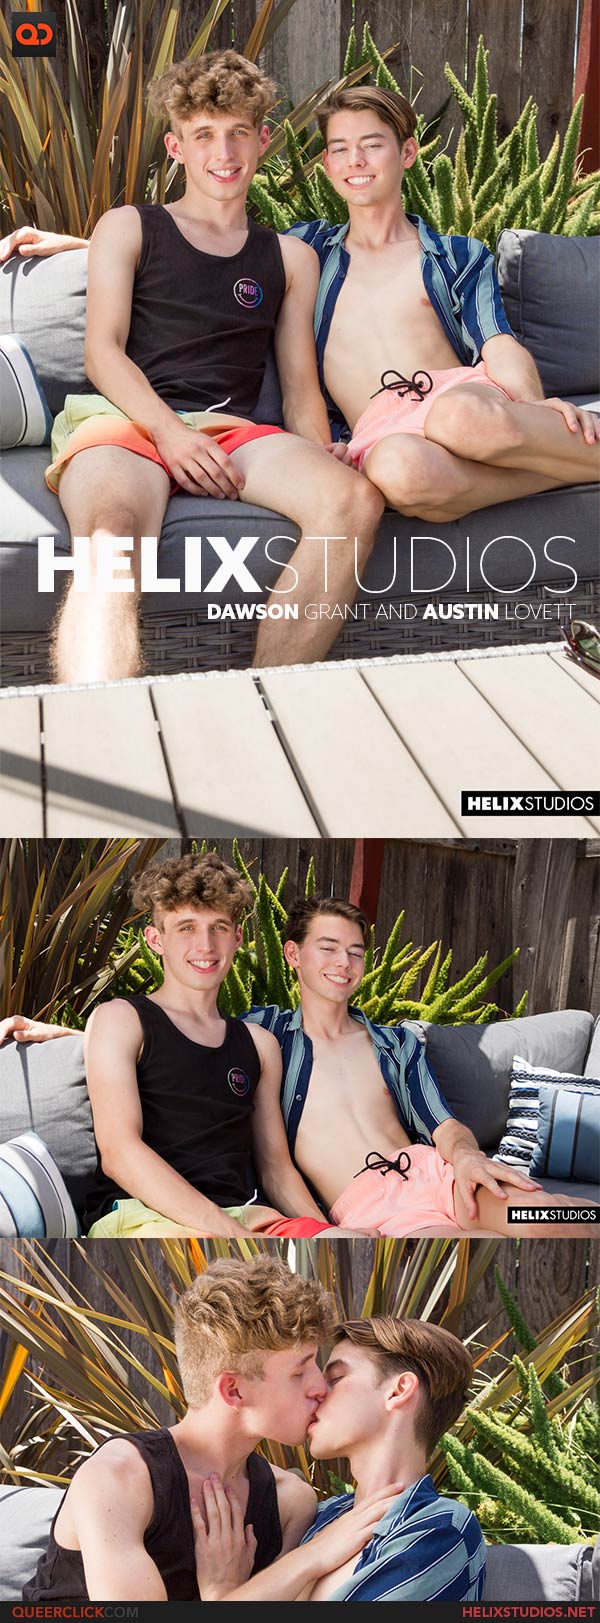 Helix Studios: Dawson Grant and Austin Lovett